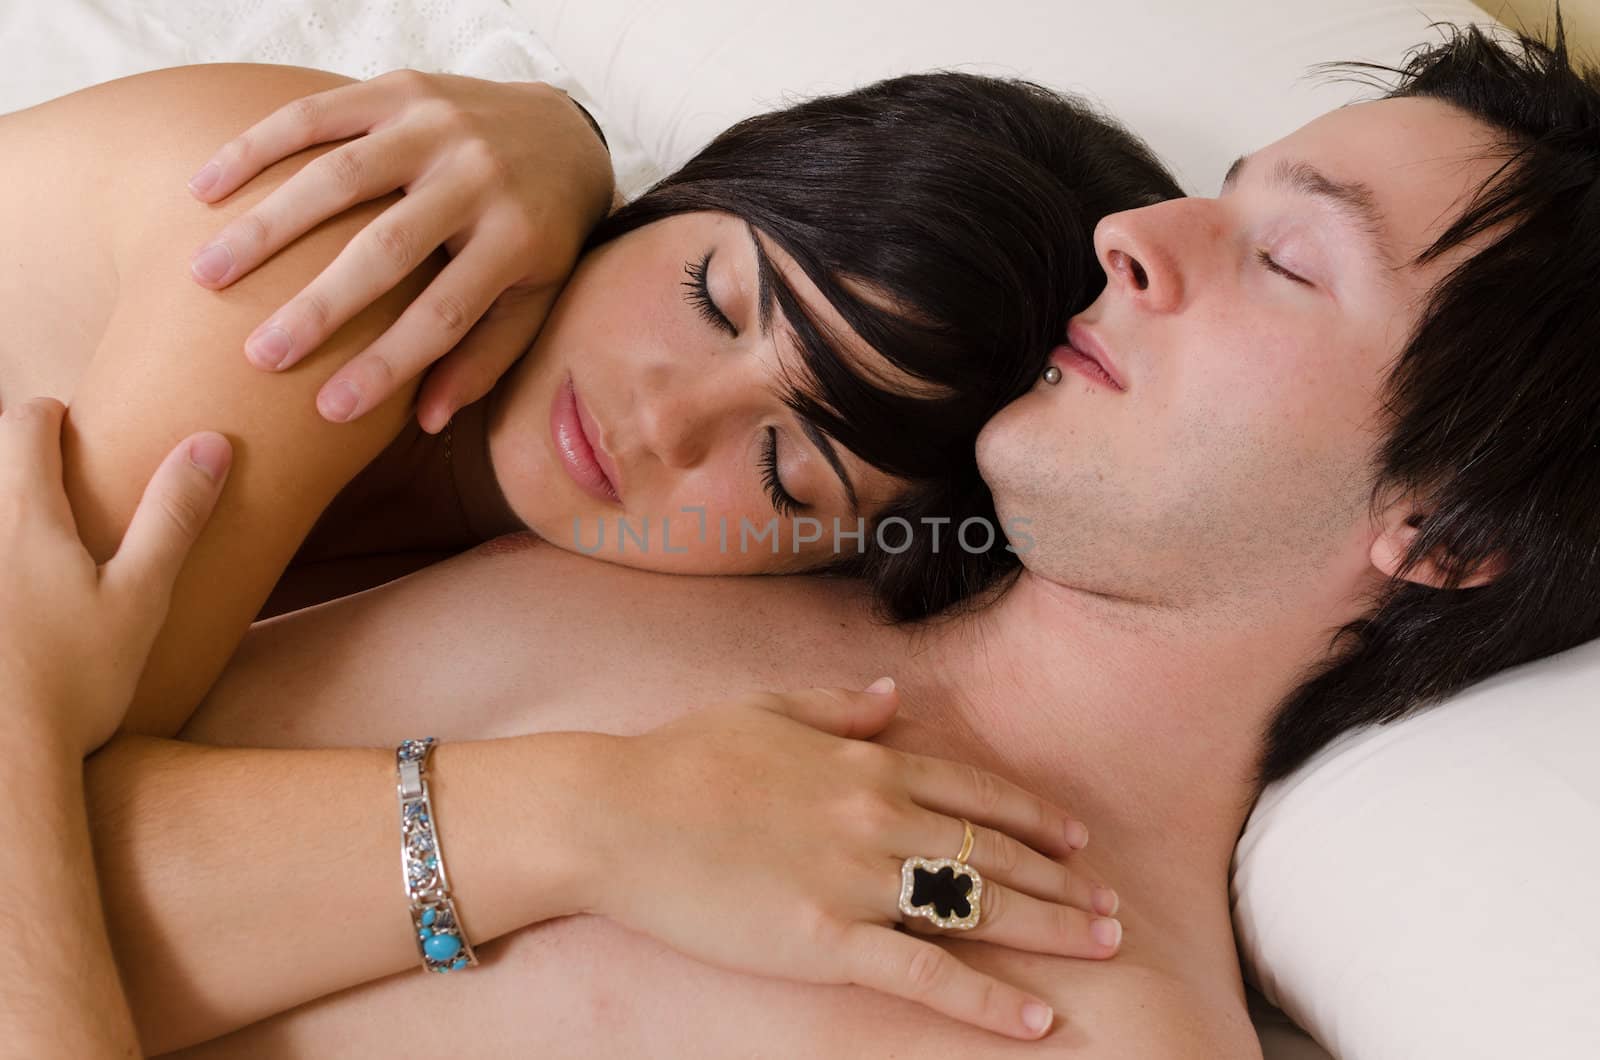 Sleeping couple by hemeroskopion